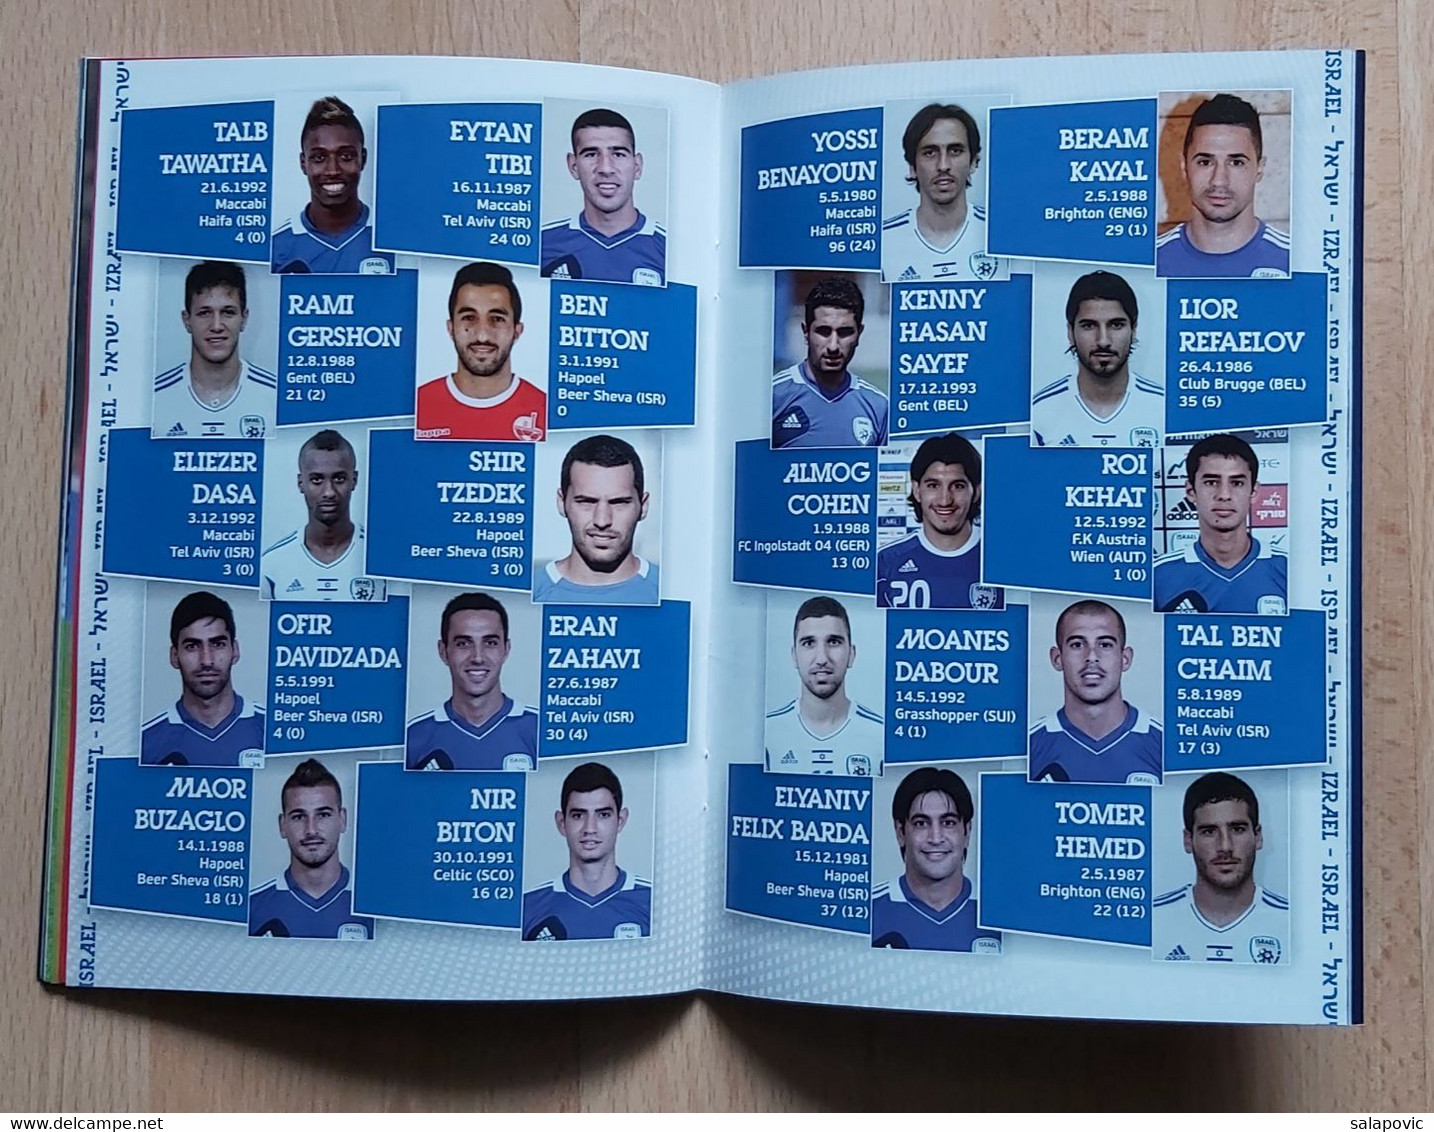 CROATIA Vs ISRAEL - 2016. Friendly Football Match   FOOTBALL MATCH PROGRAM - Libros